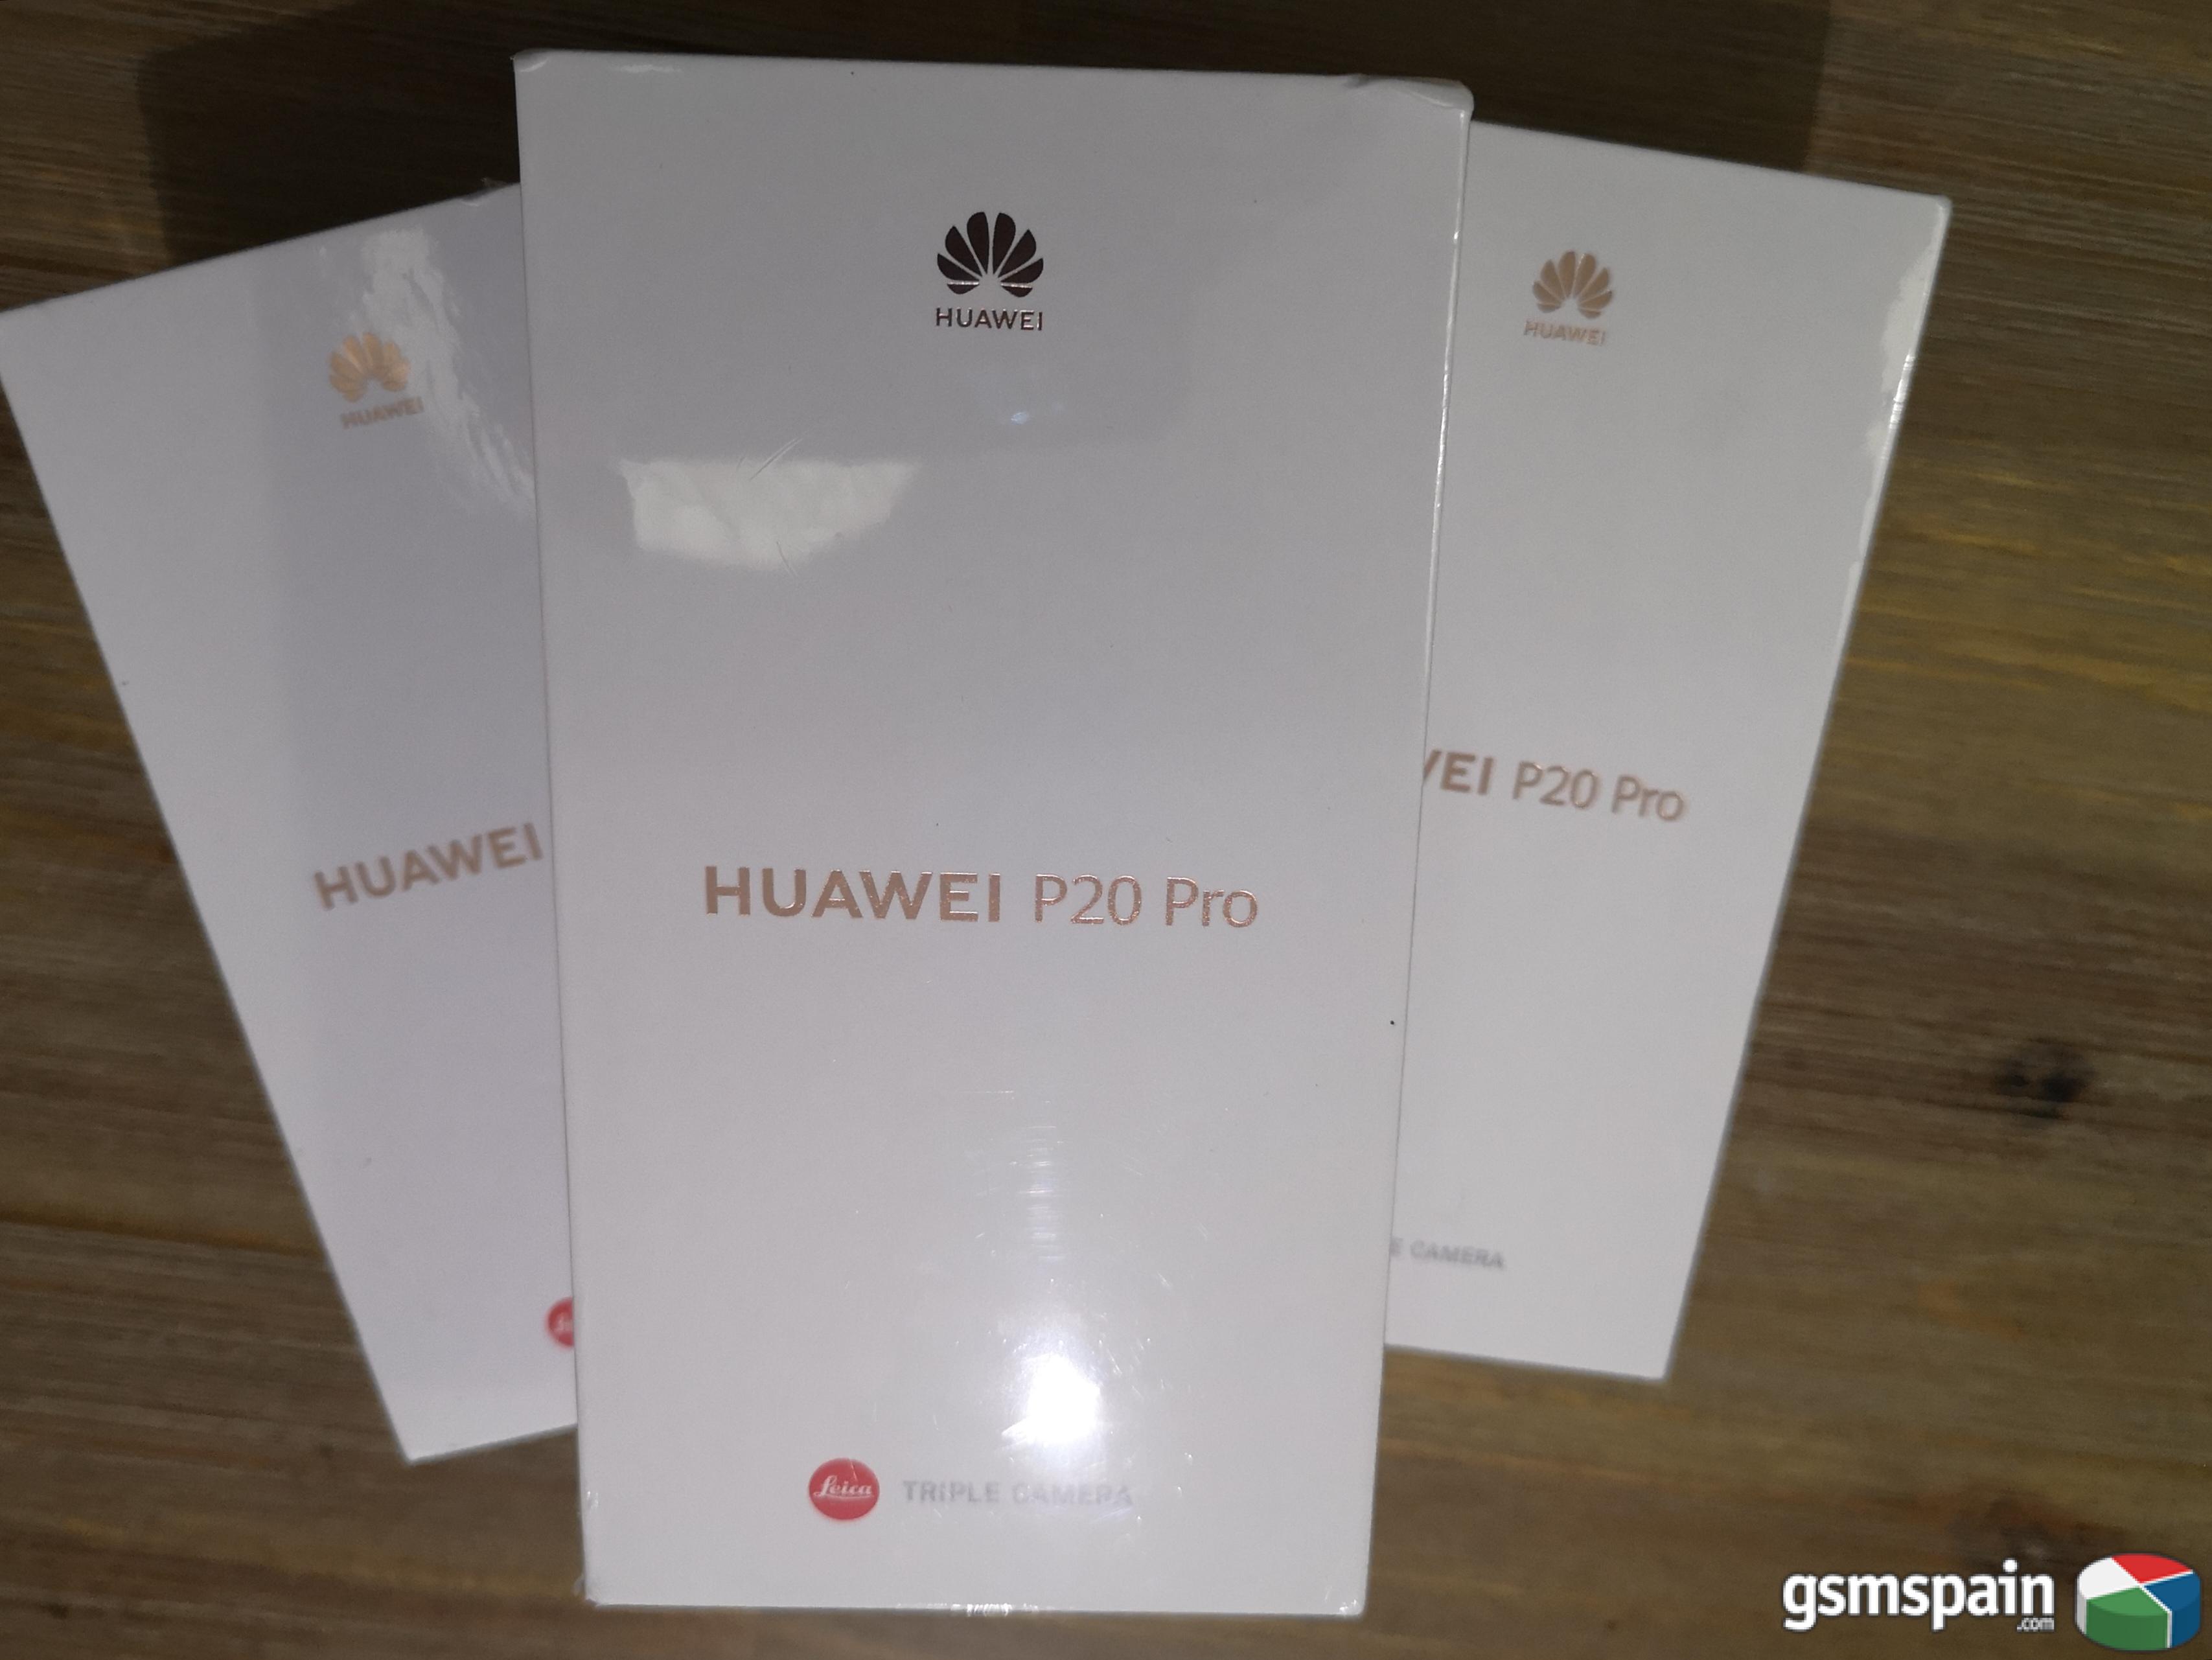 [VENDO] 3 unidades de Huawei P20 Pro precintados, libres y garanta, 450e con envo